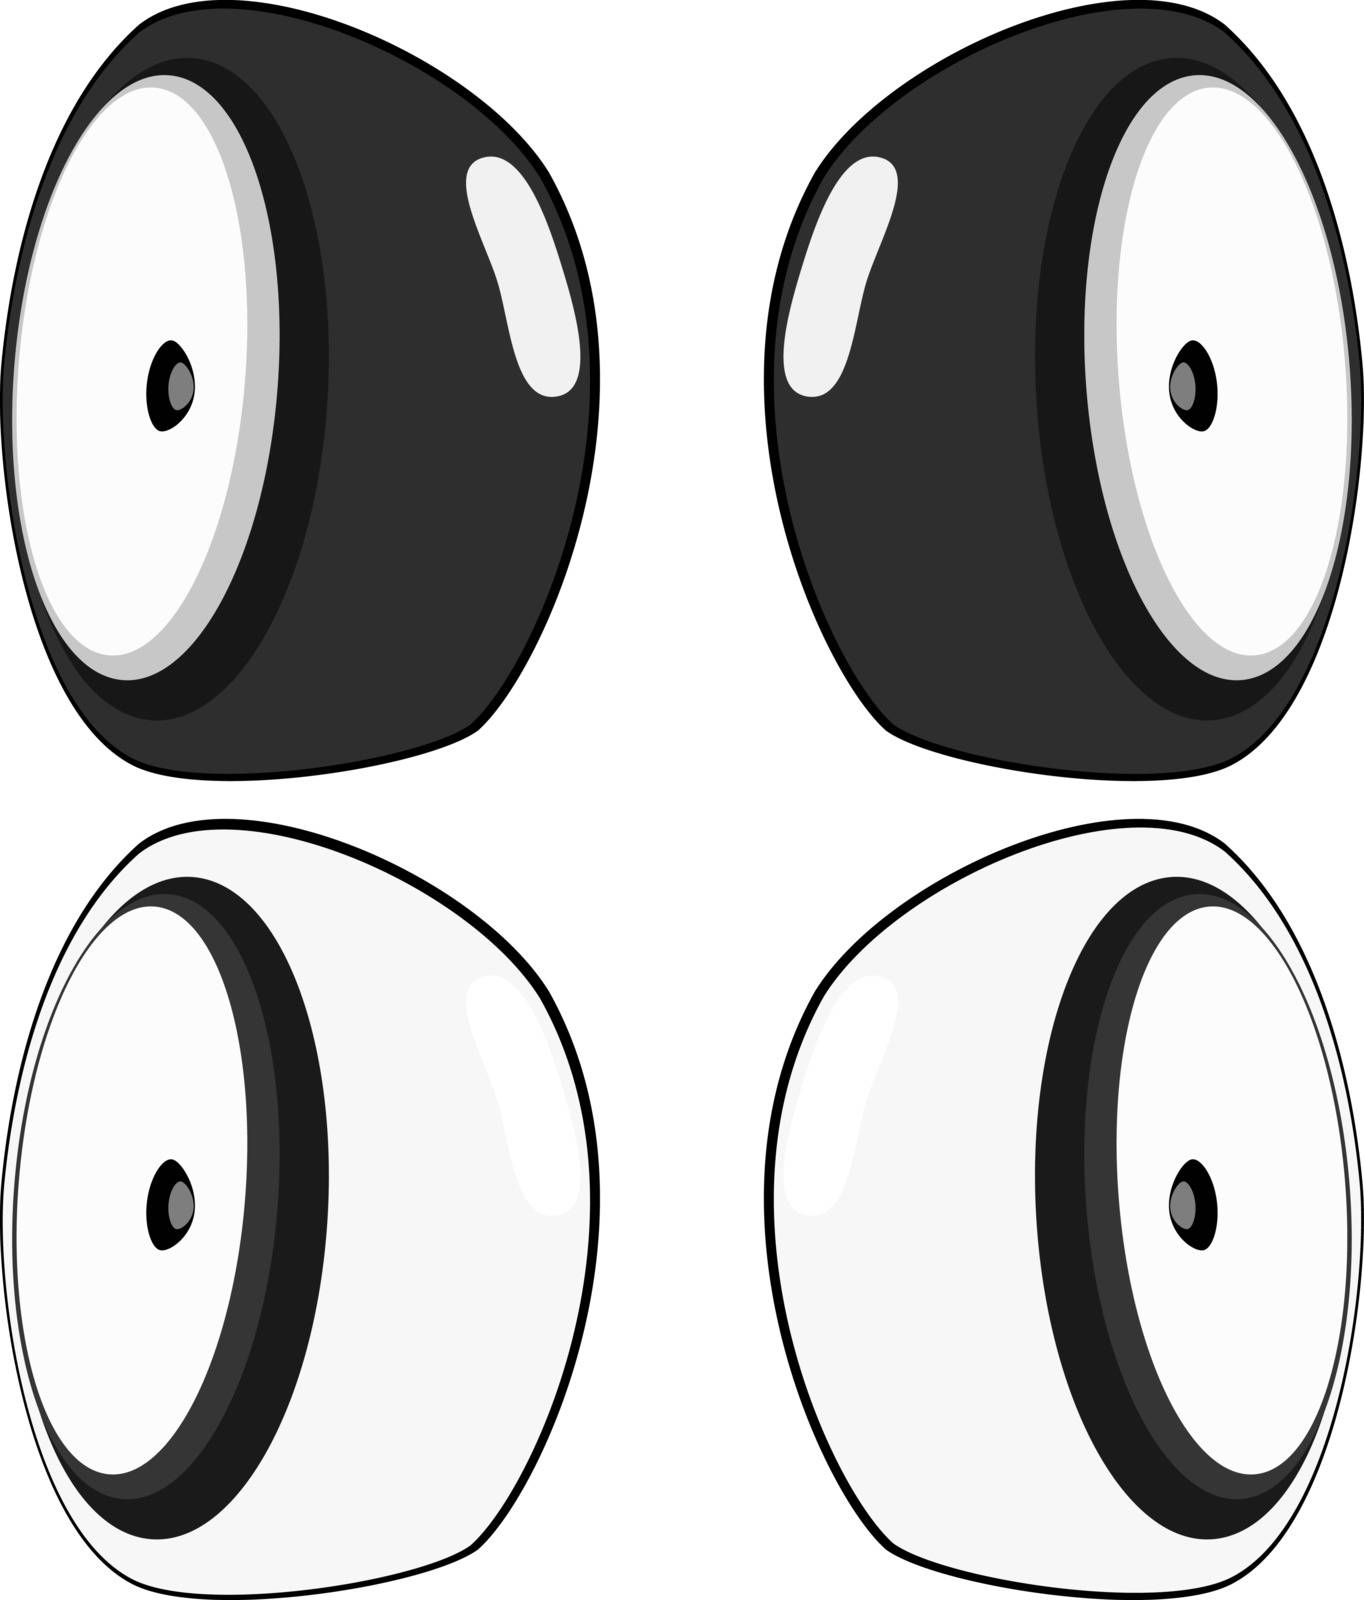 Speaker flat icon sound audio concept illustration